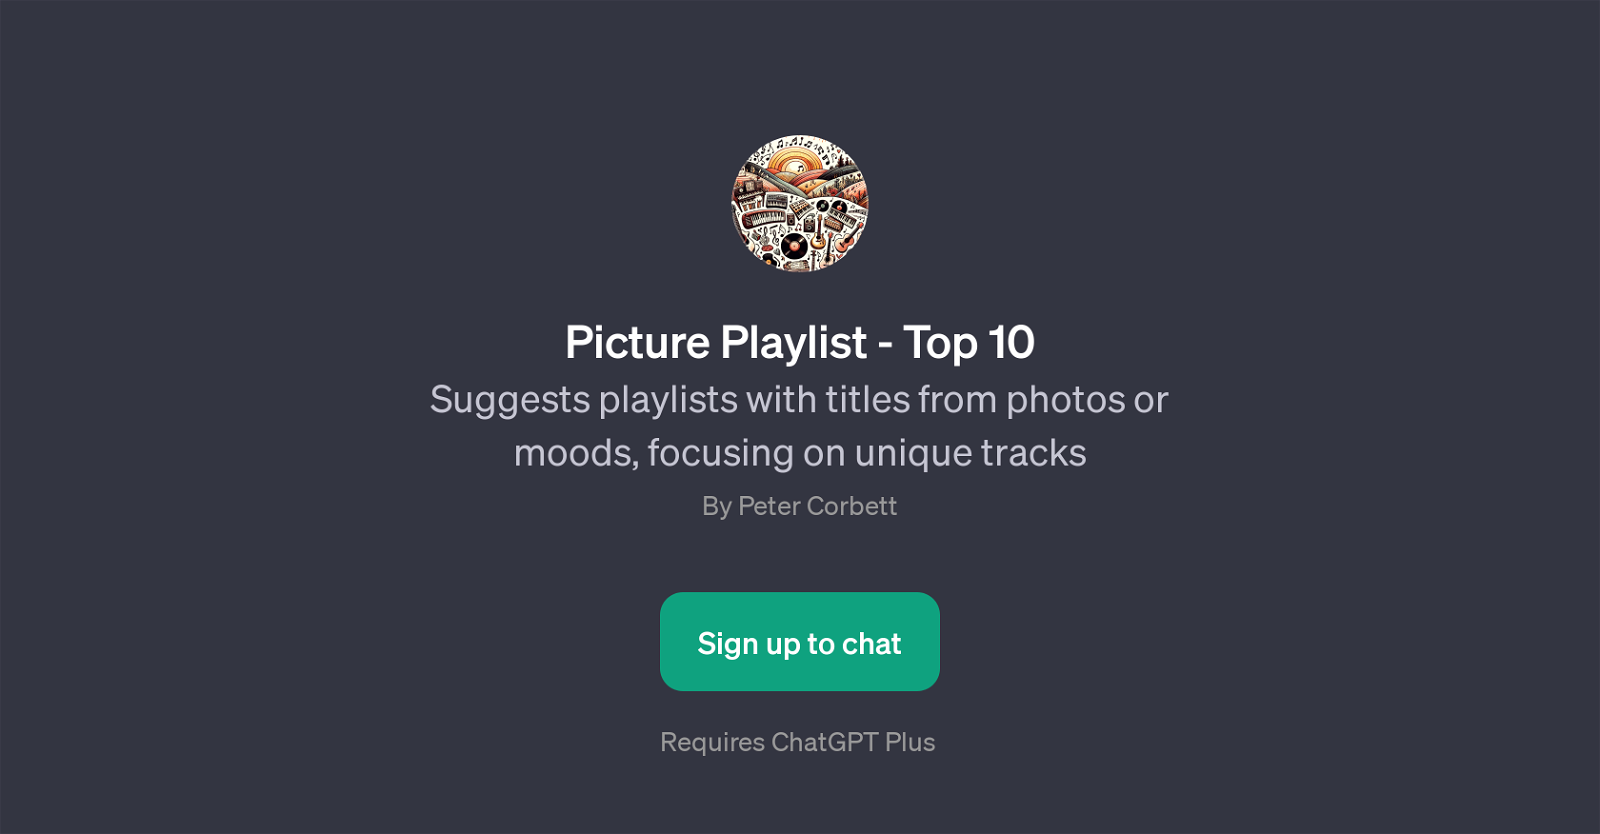 Picture Playlist - Top 10 website